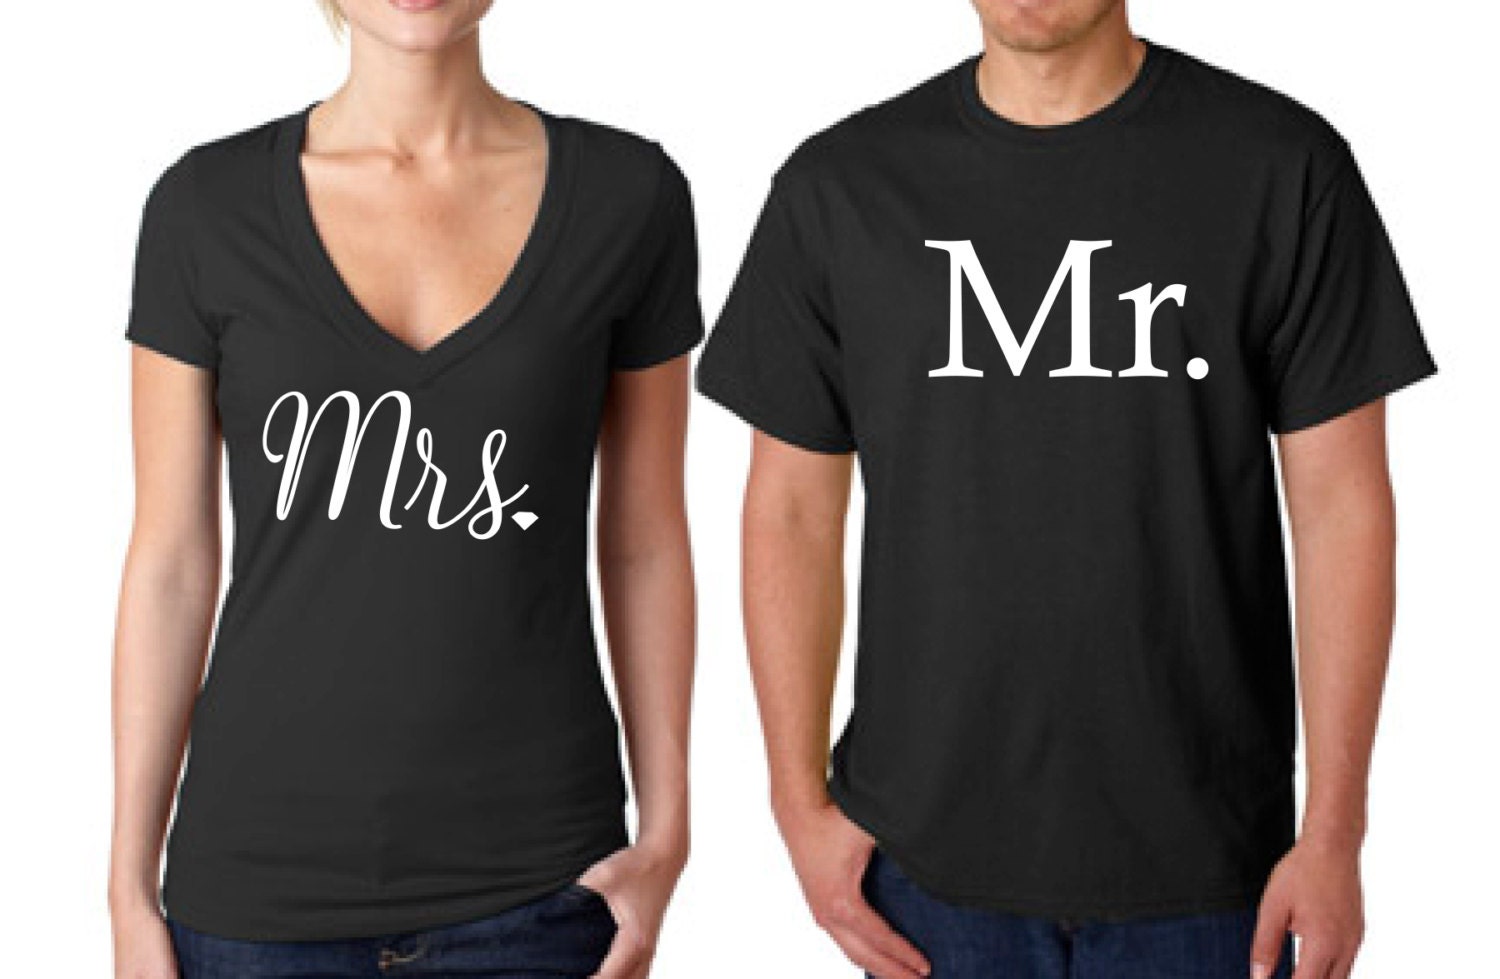 MR and MRS shirts newlywed shirt wedding gift bridal gift